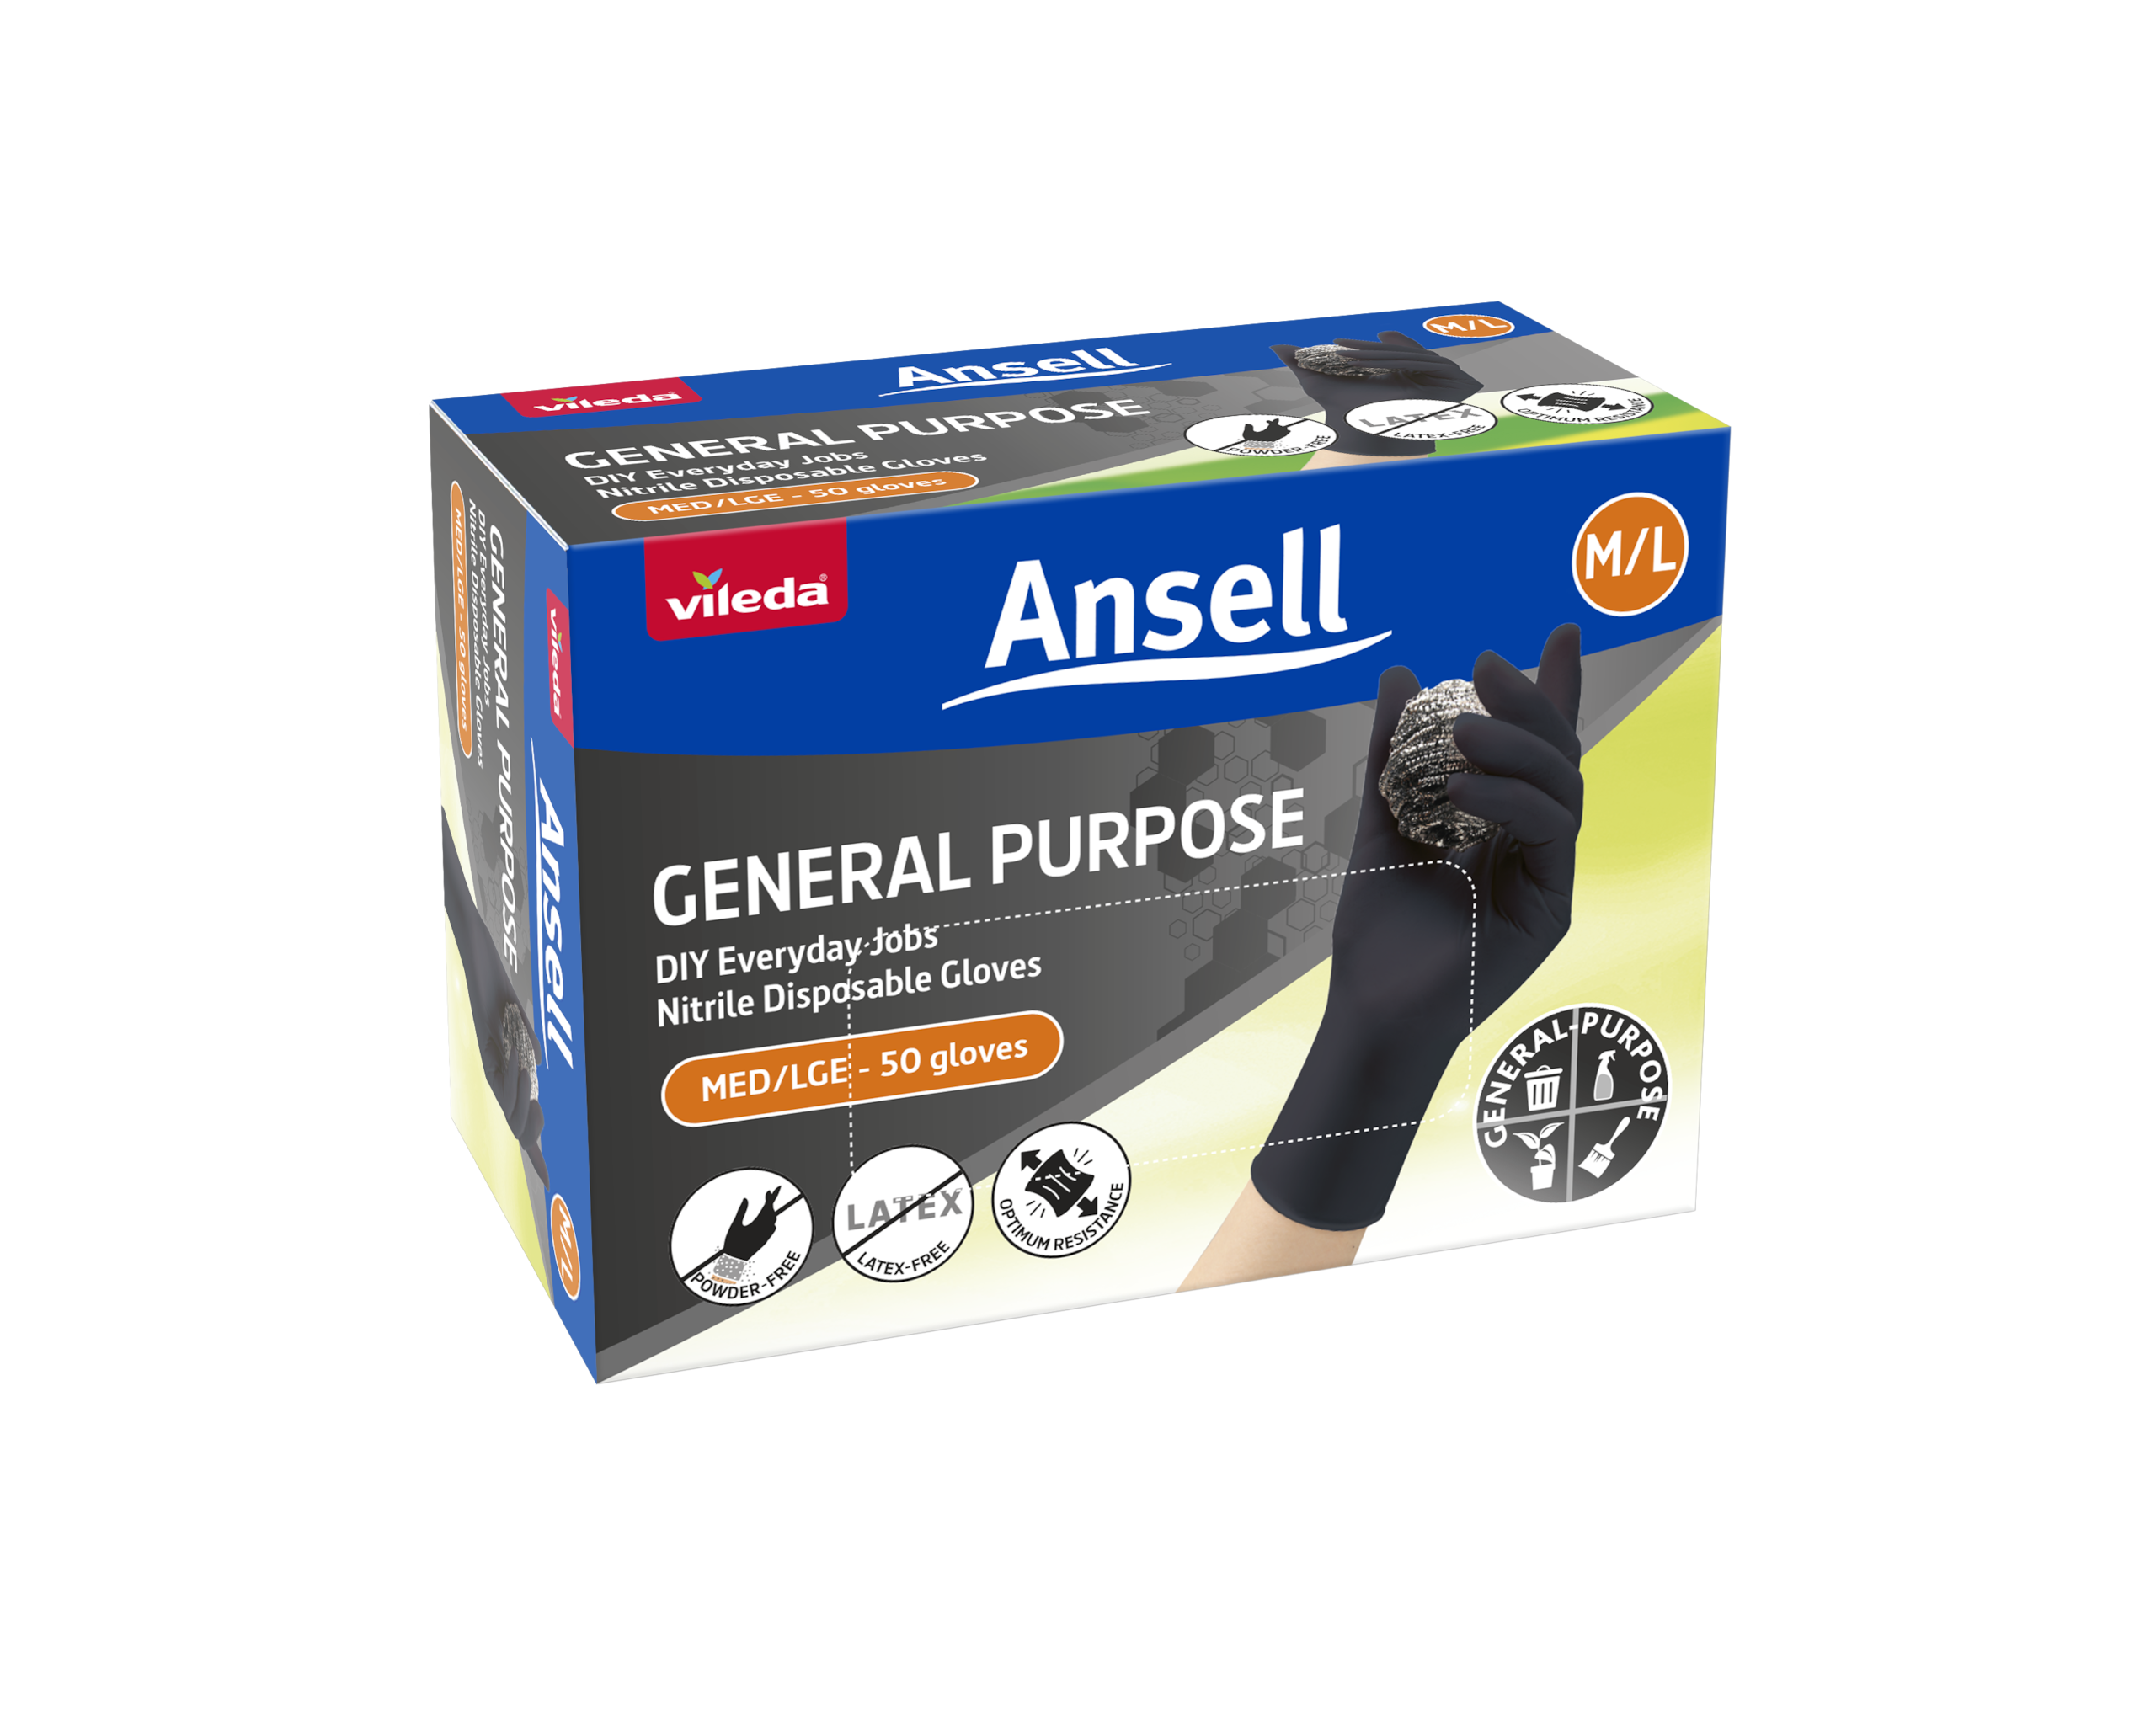 Vileda Ansell General Purpose Nitrile Gloves 50-Pack - M/L